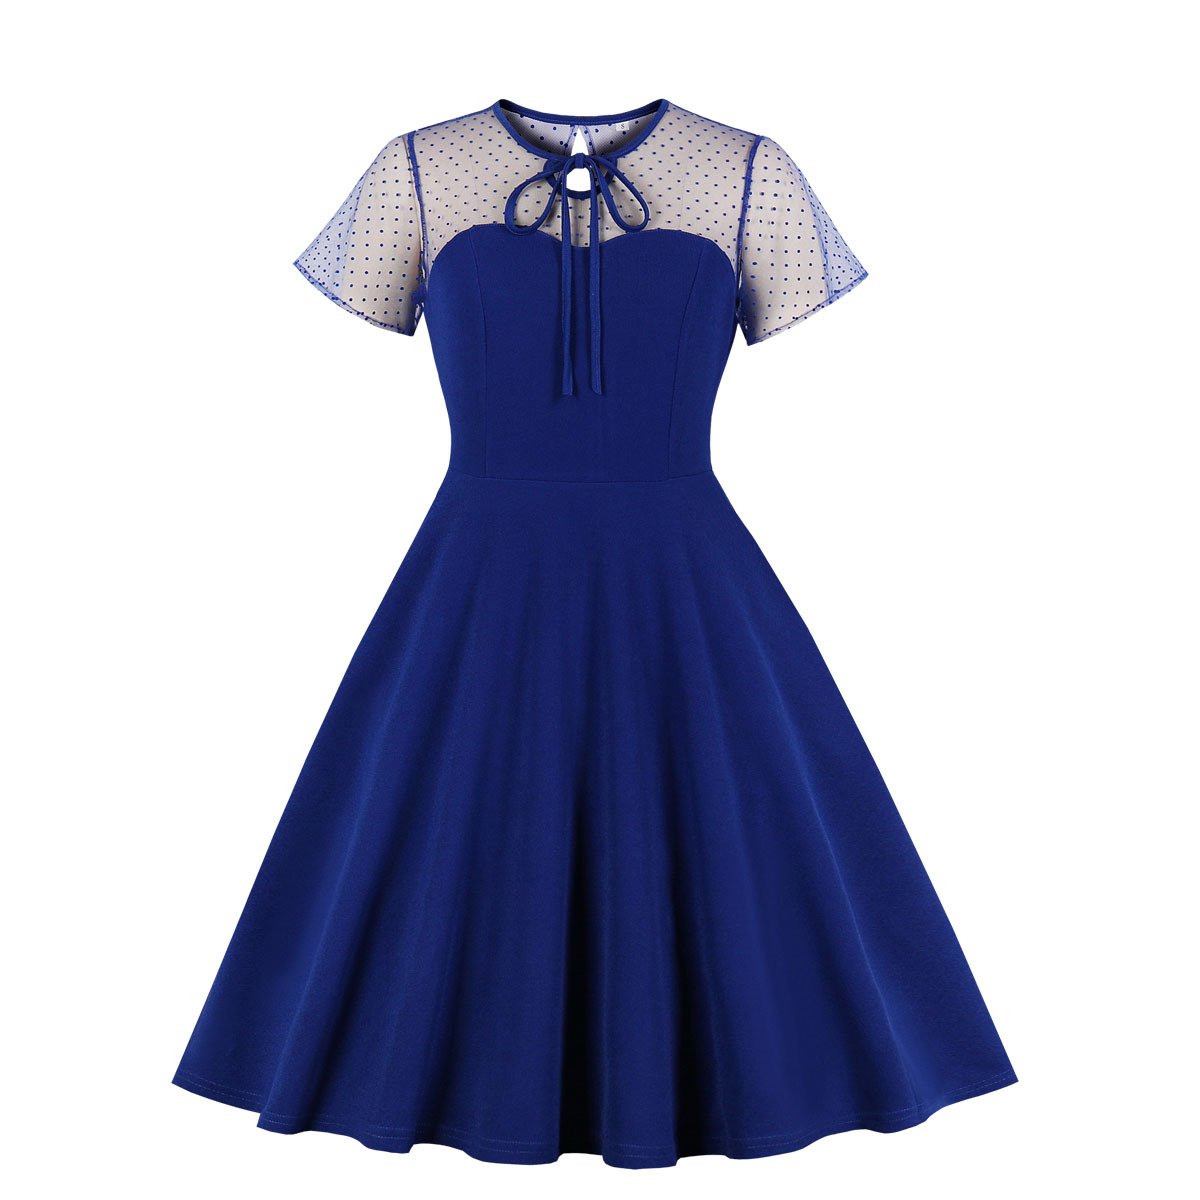 Retro Women Short Sleeves Net Dot Ball Sleeves-Vintage Dresses-Blue-S-Free Shipping at meselling99